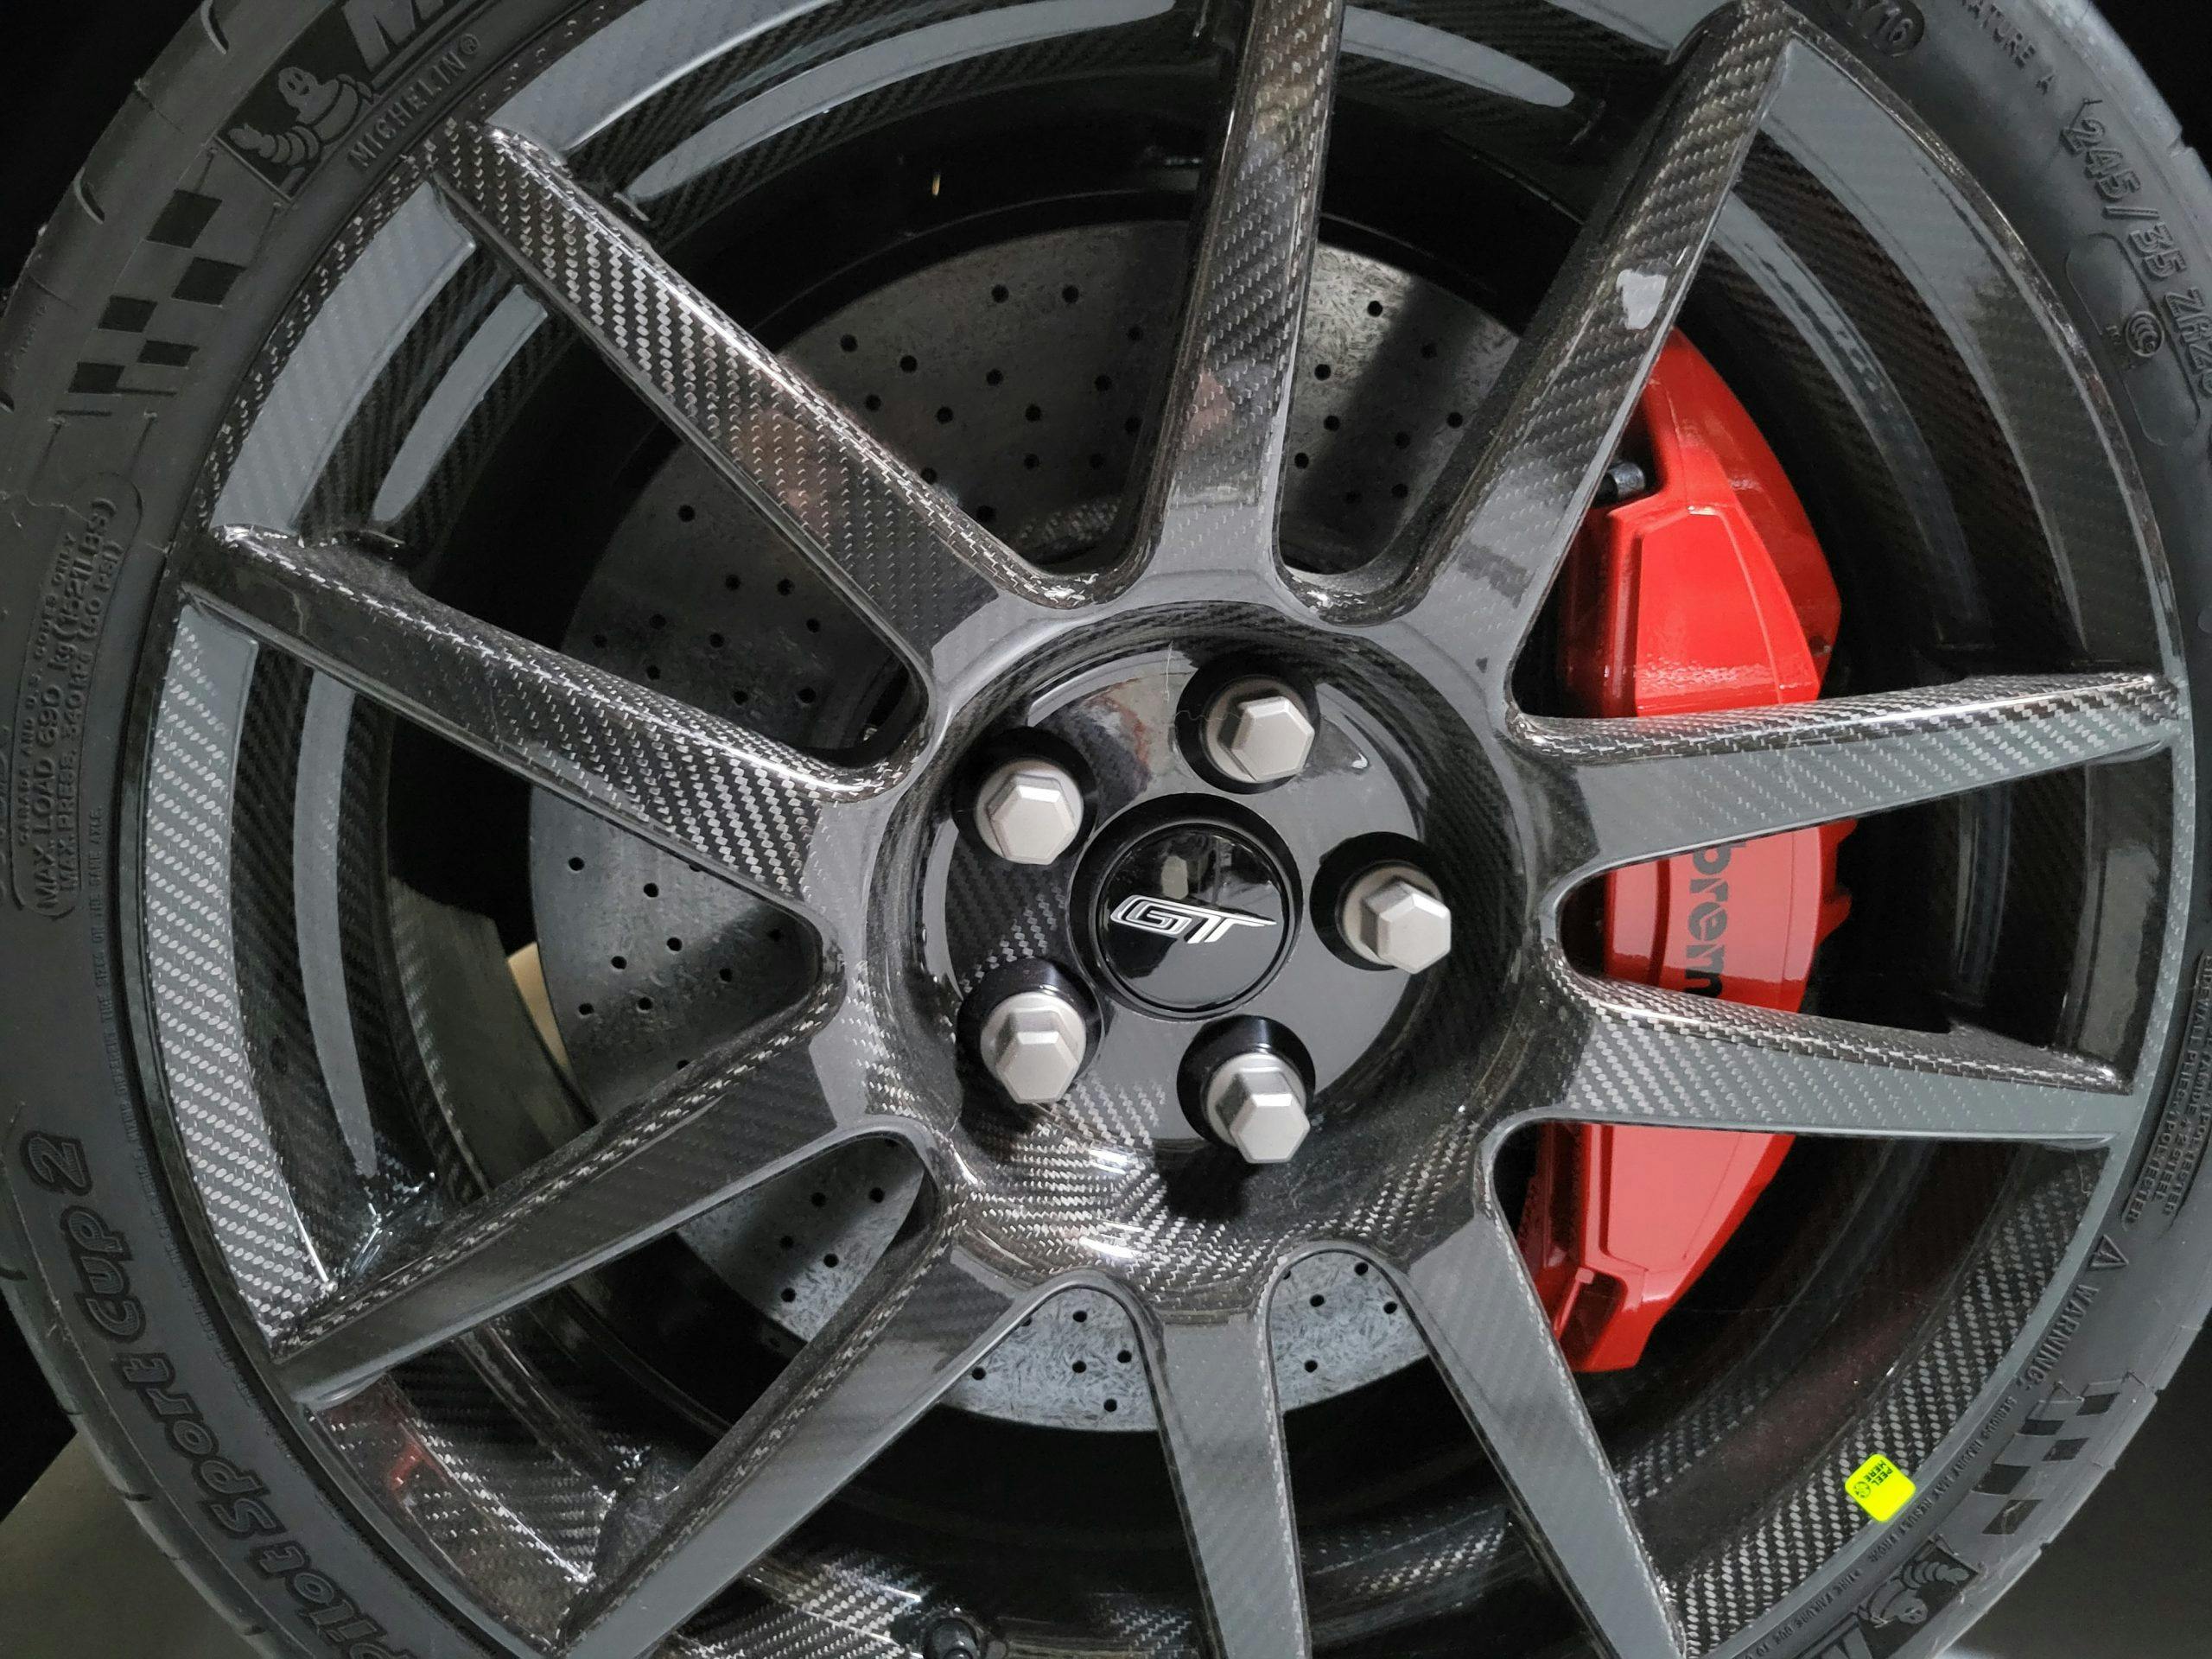 GT Carbon Wheel